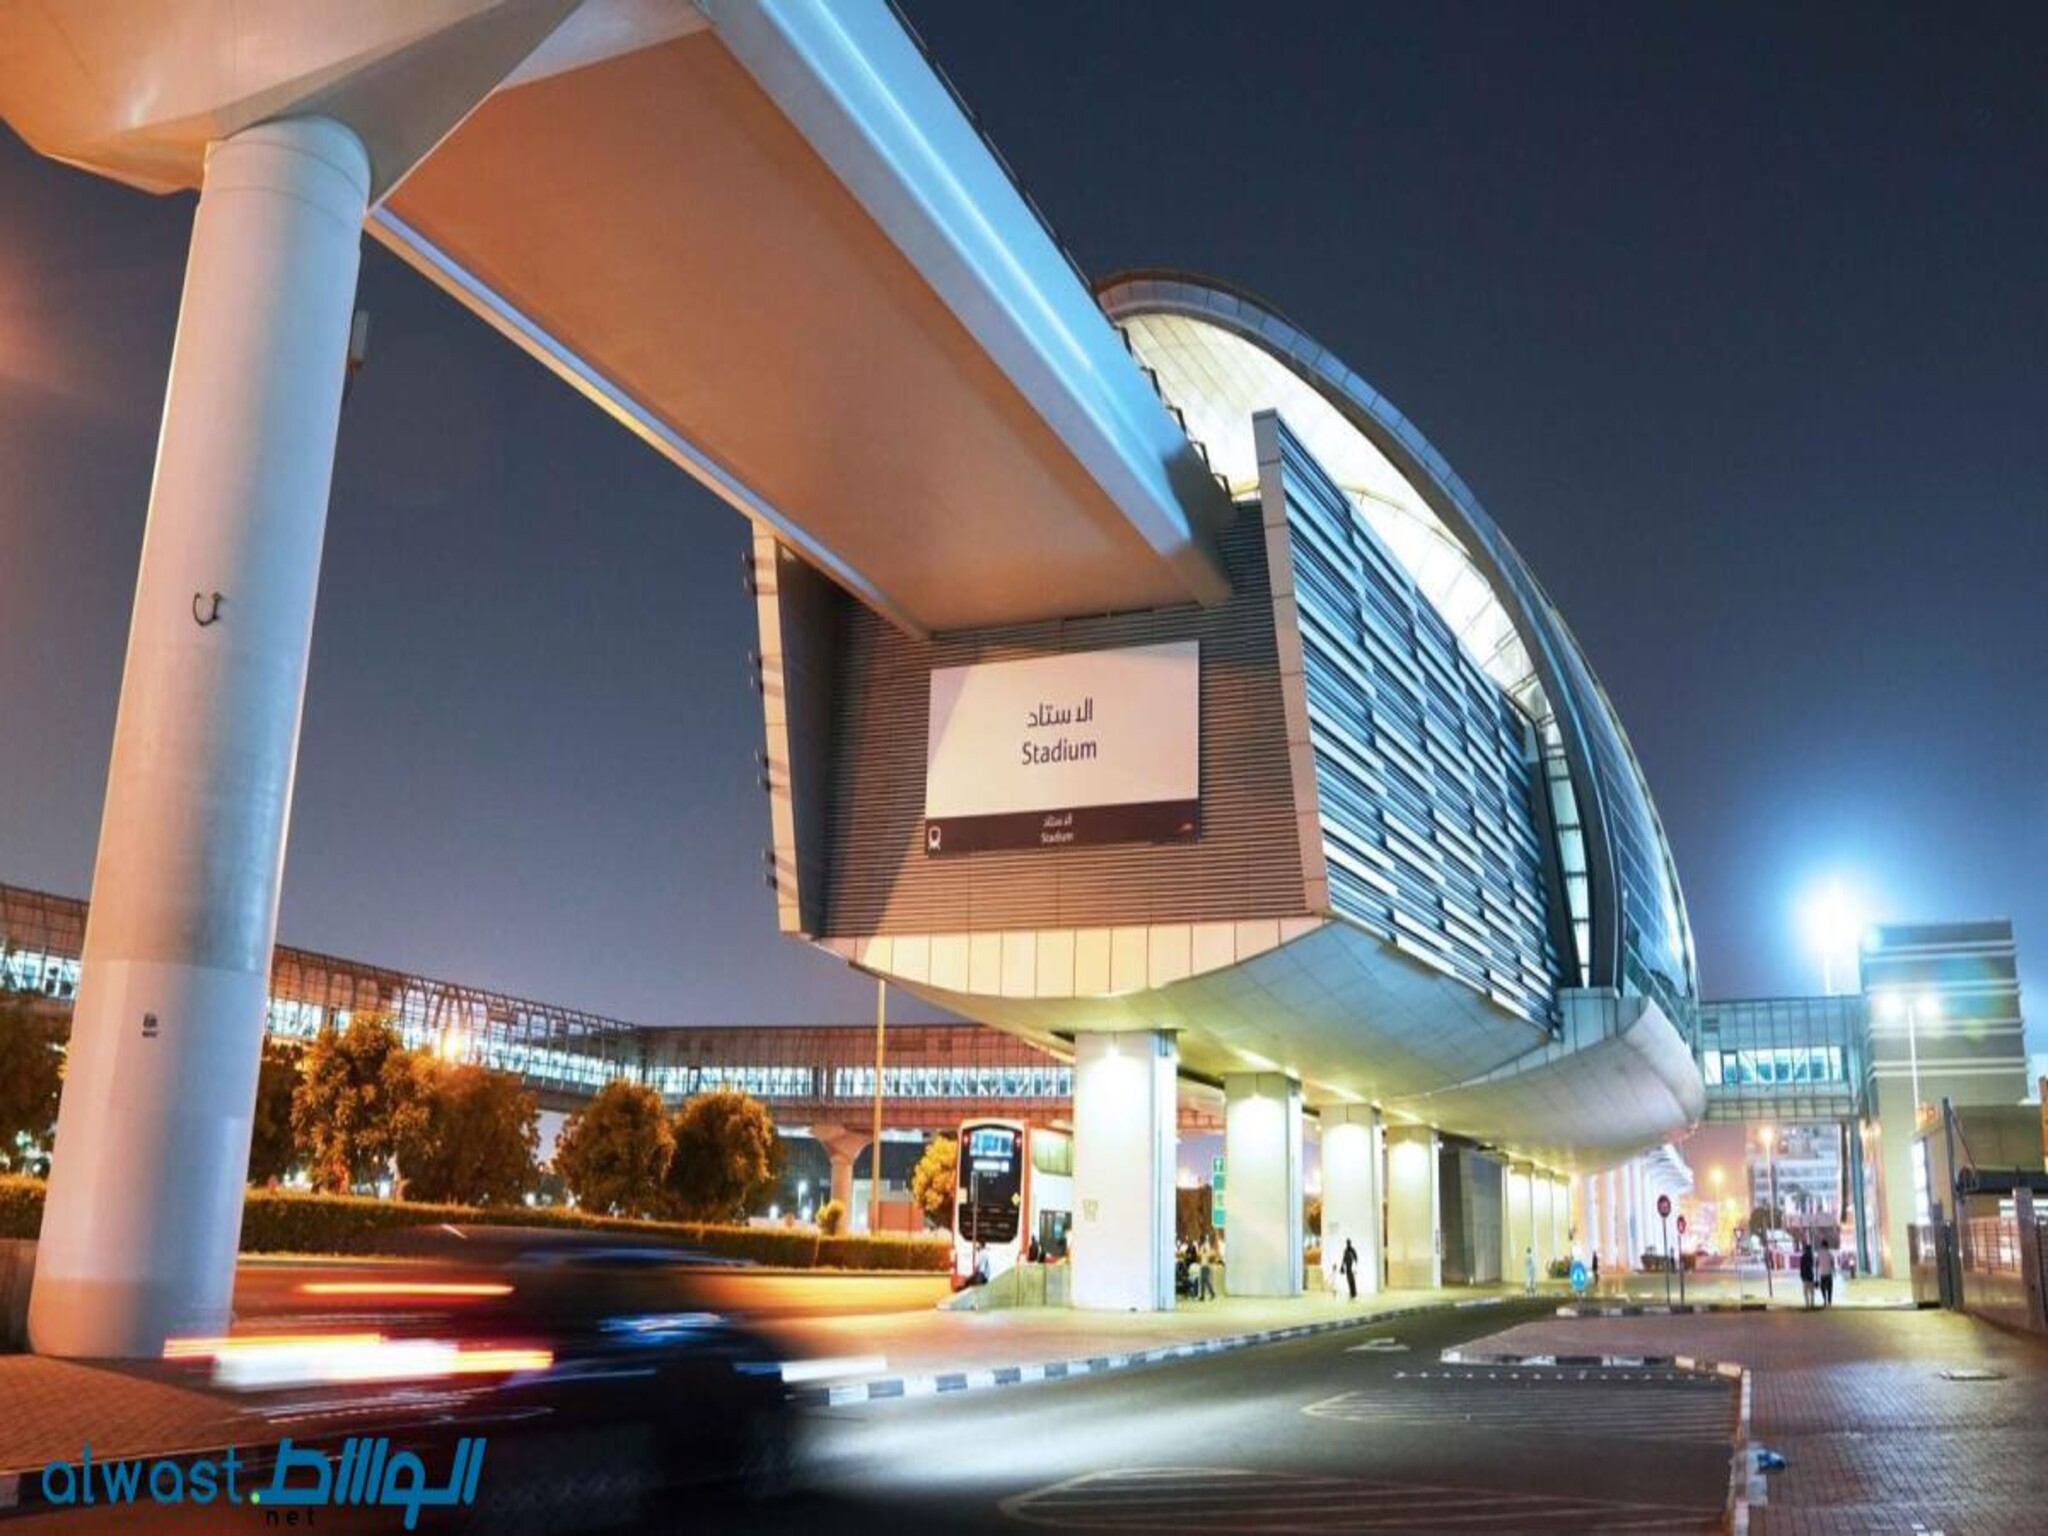 Dubai illuminates Metro stations with 20,000 LED lights, saving 16m kilowatts